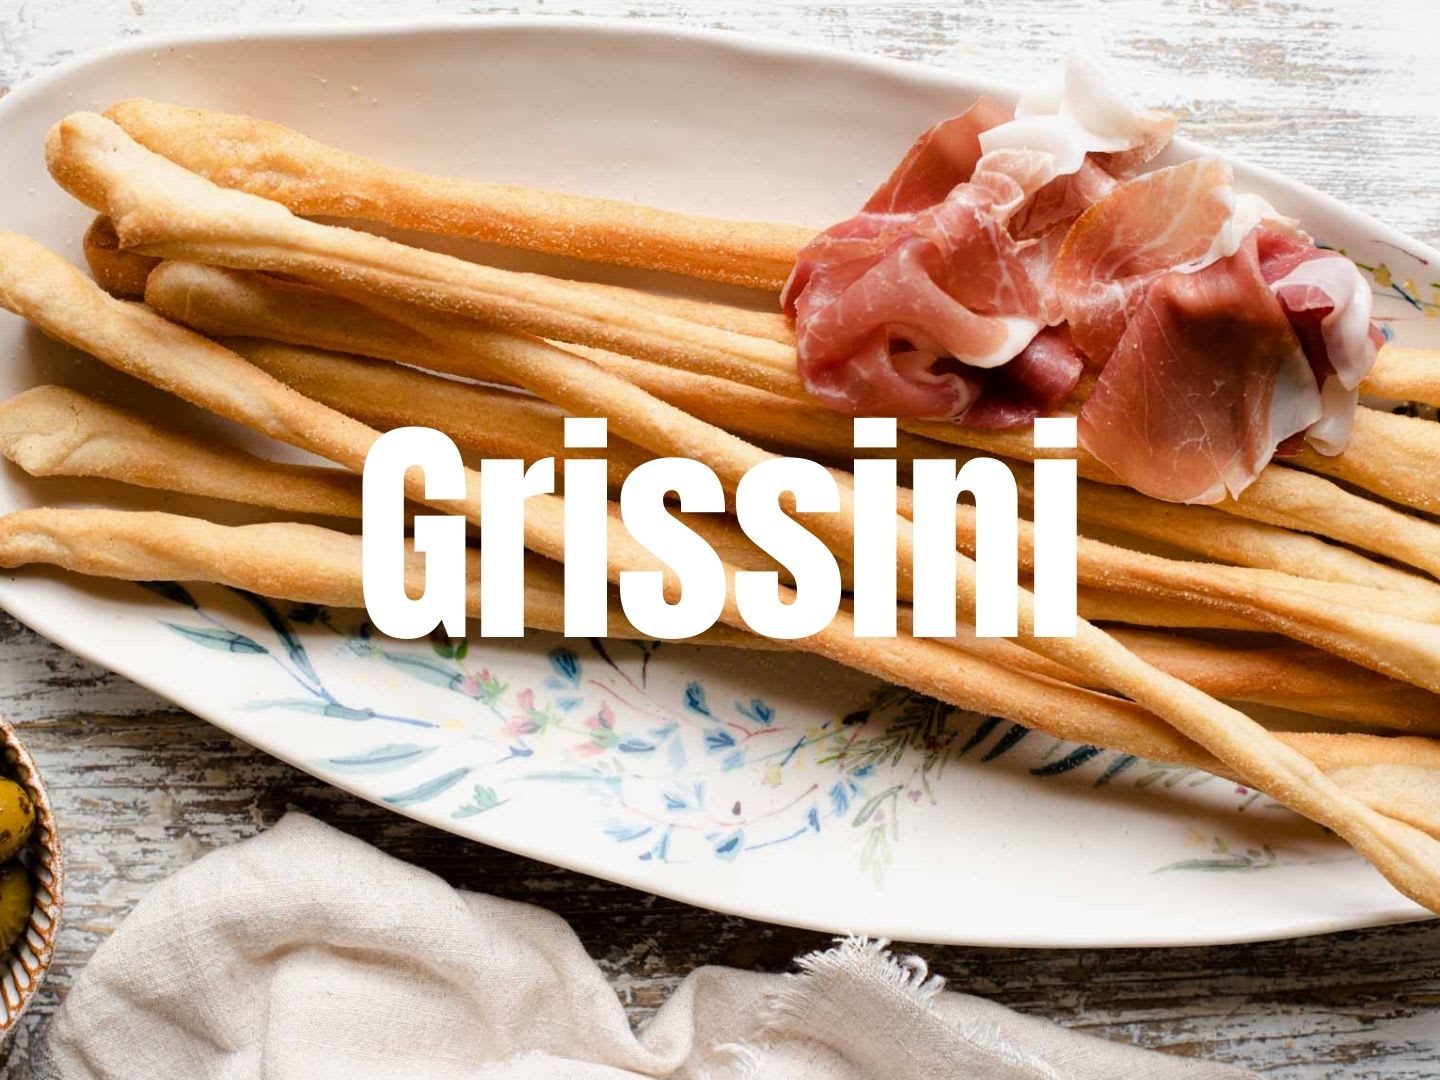 Grissini - Italian Kitchen The Rustic Breadsticks Inside 